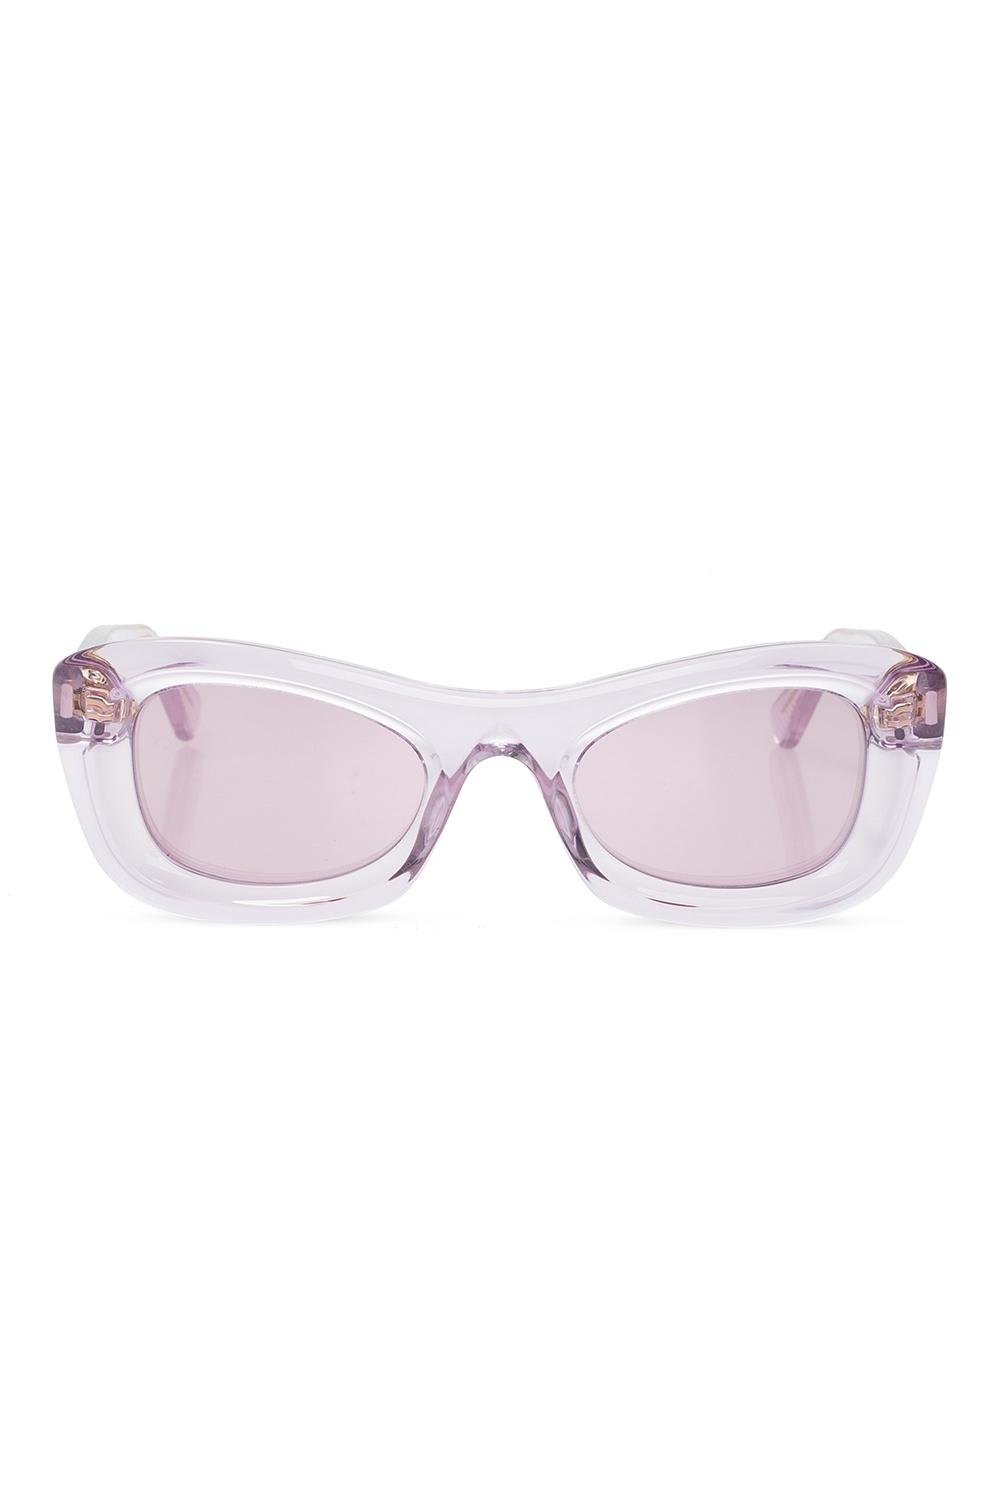 Bottega Veneta Eyewear Logo-Embossed Sunglasses